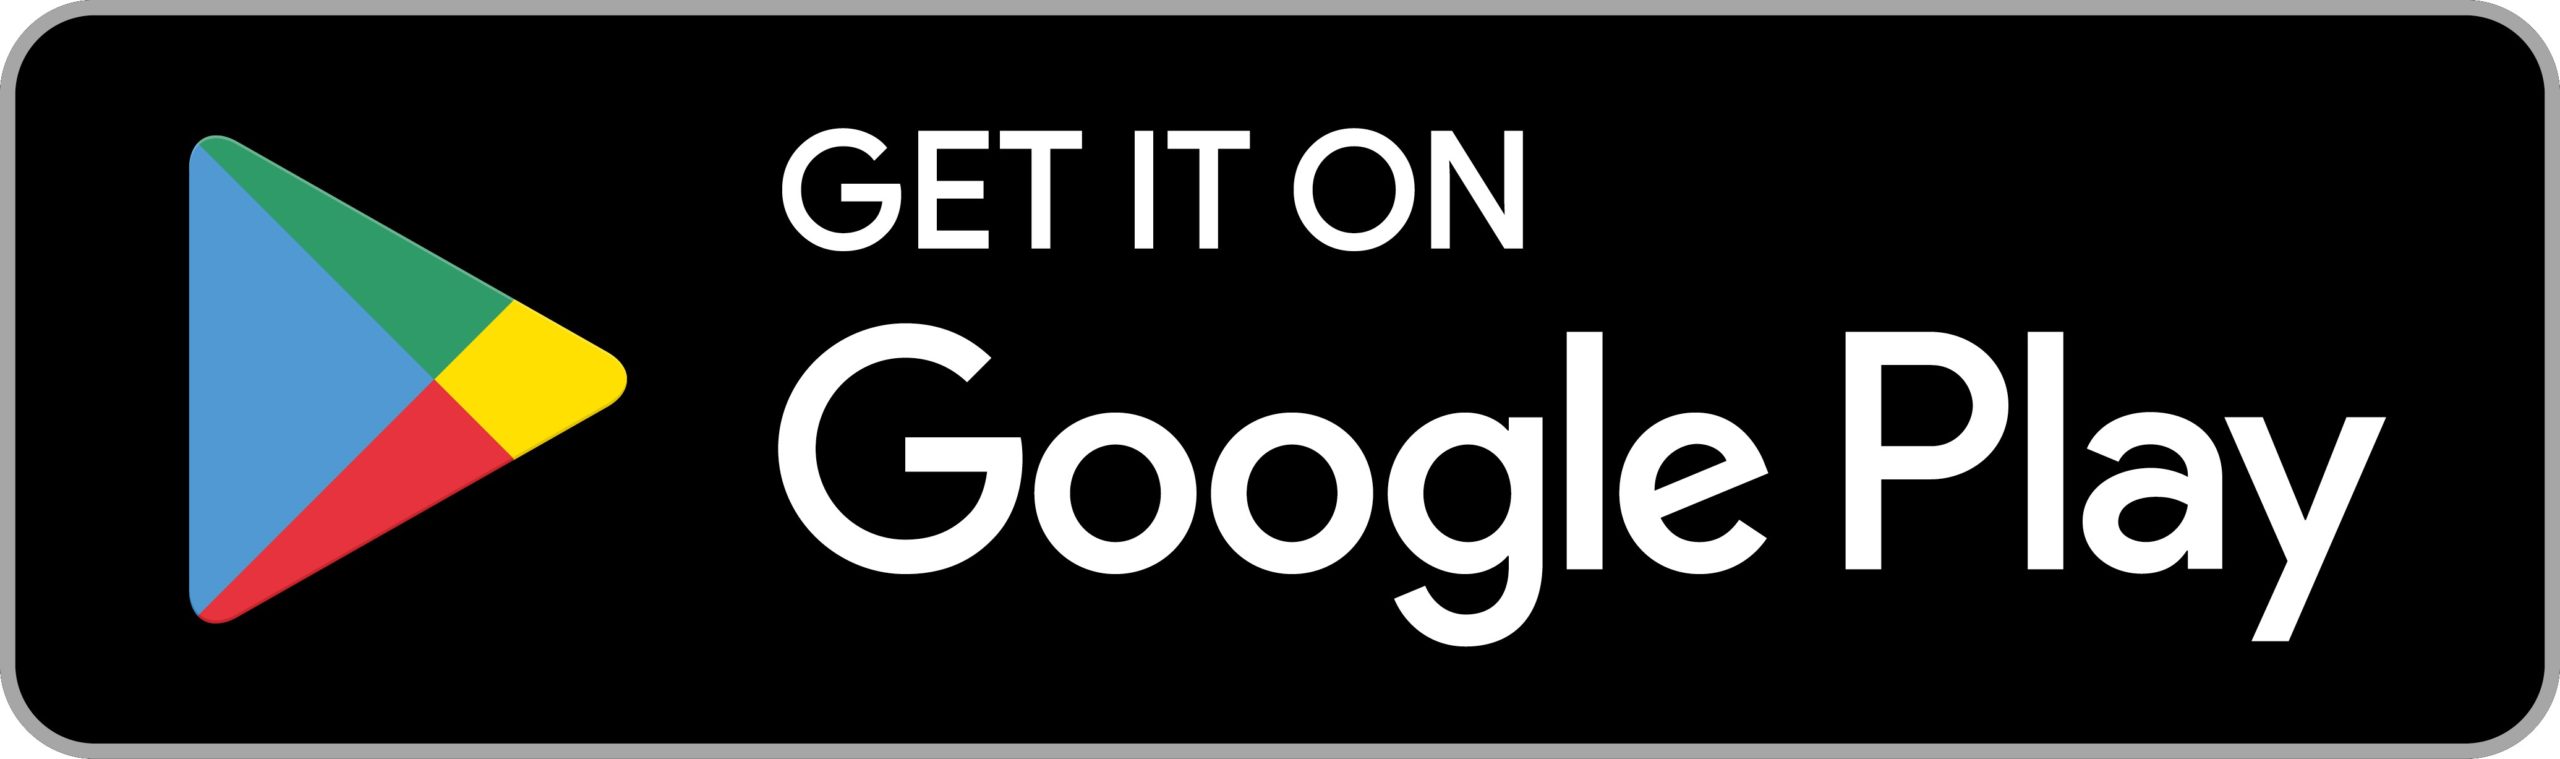 Google play logo scaled